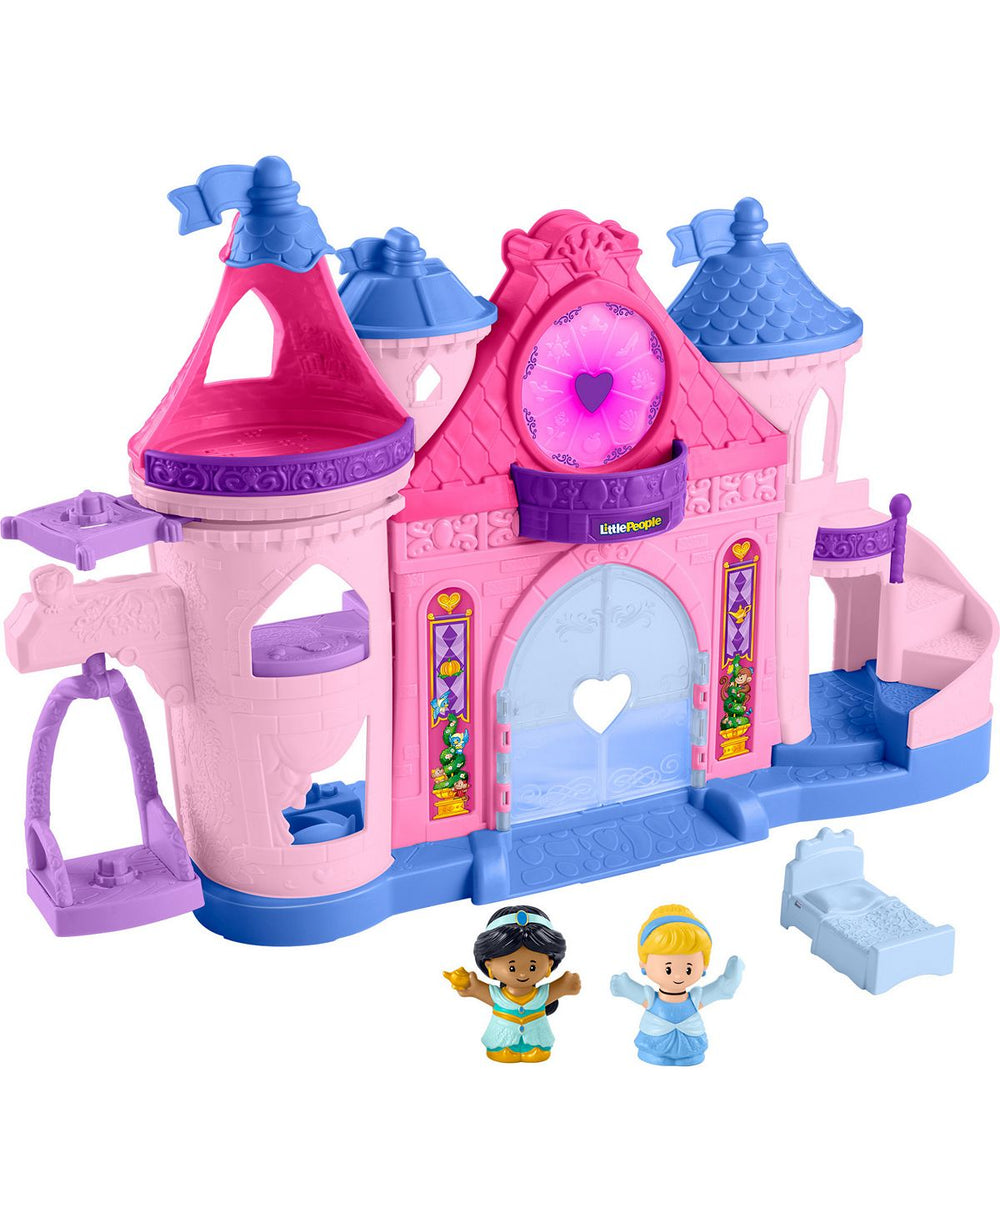 Little People Disney Princess Magical Lights Dancing Castle Playset